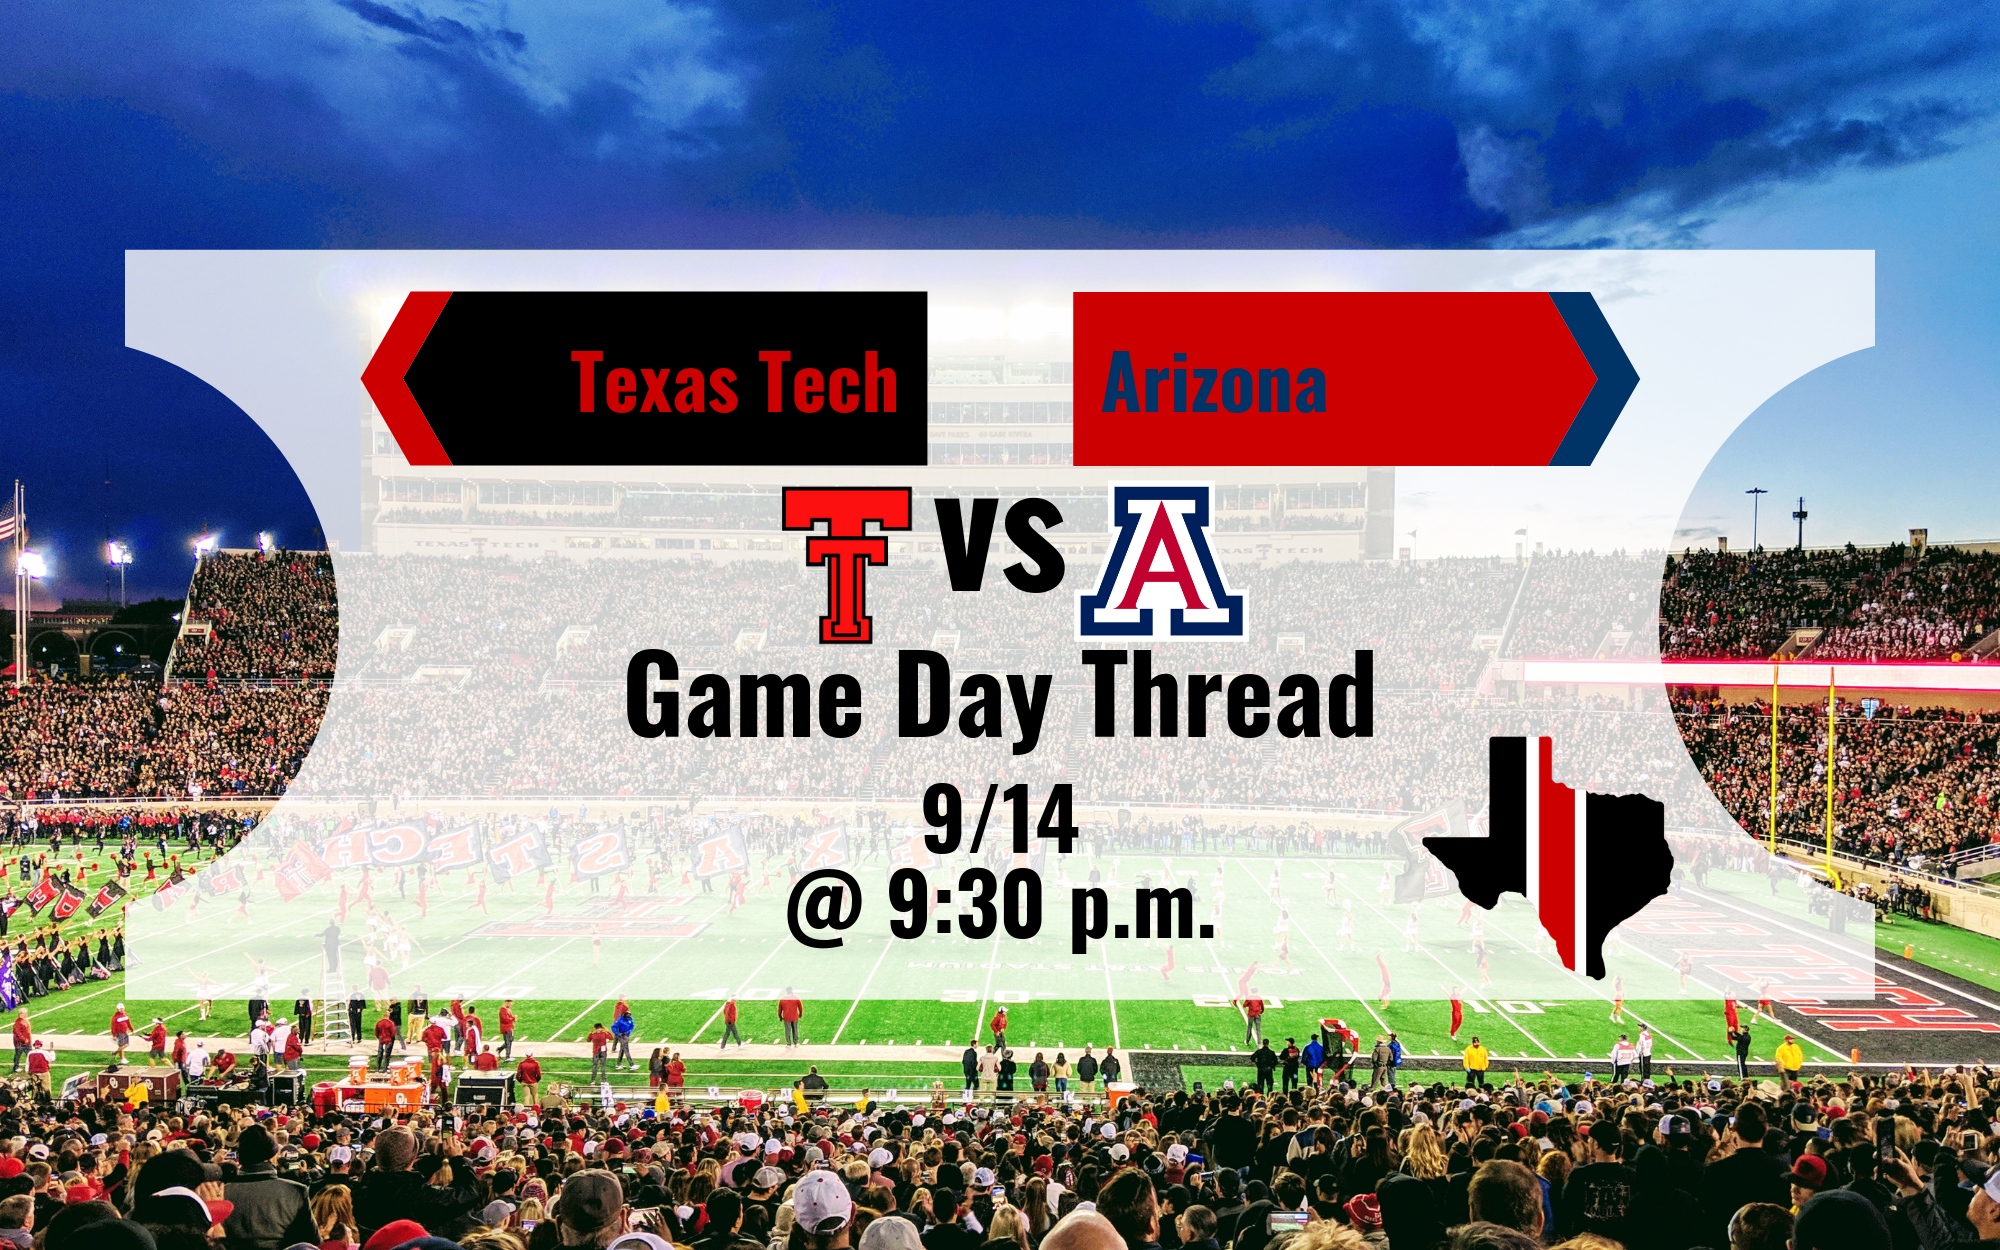 Texas Tech vs. Arizona | GDT 3